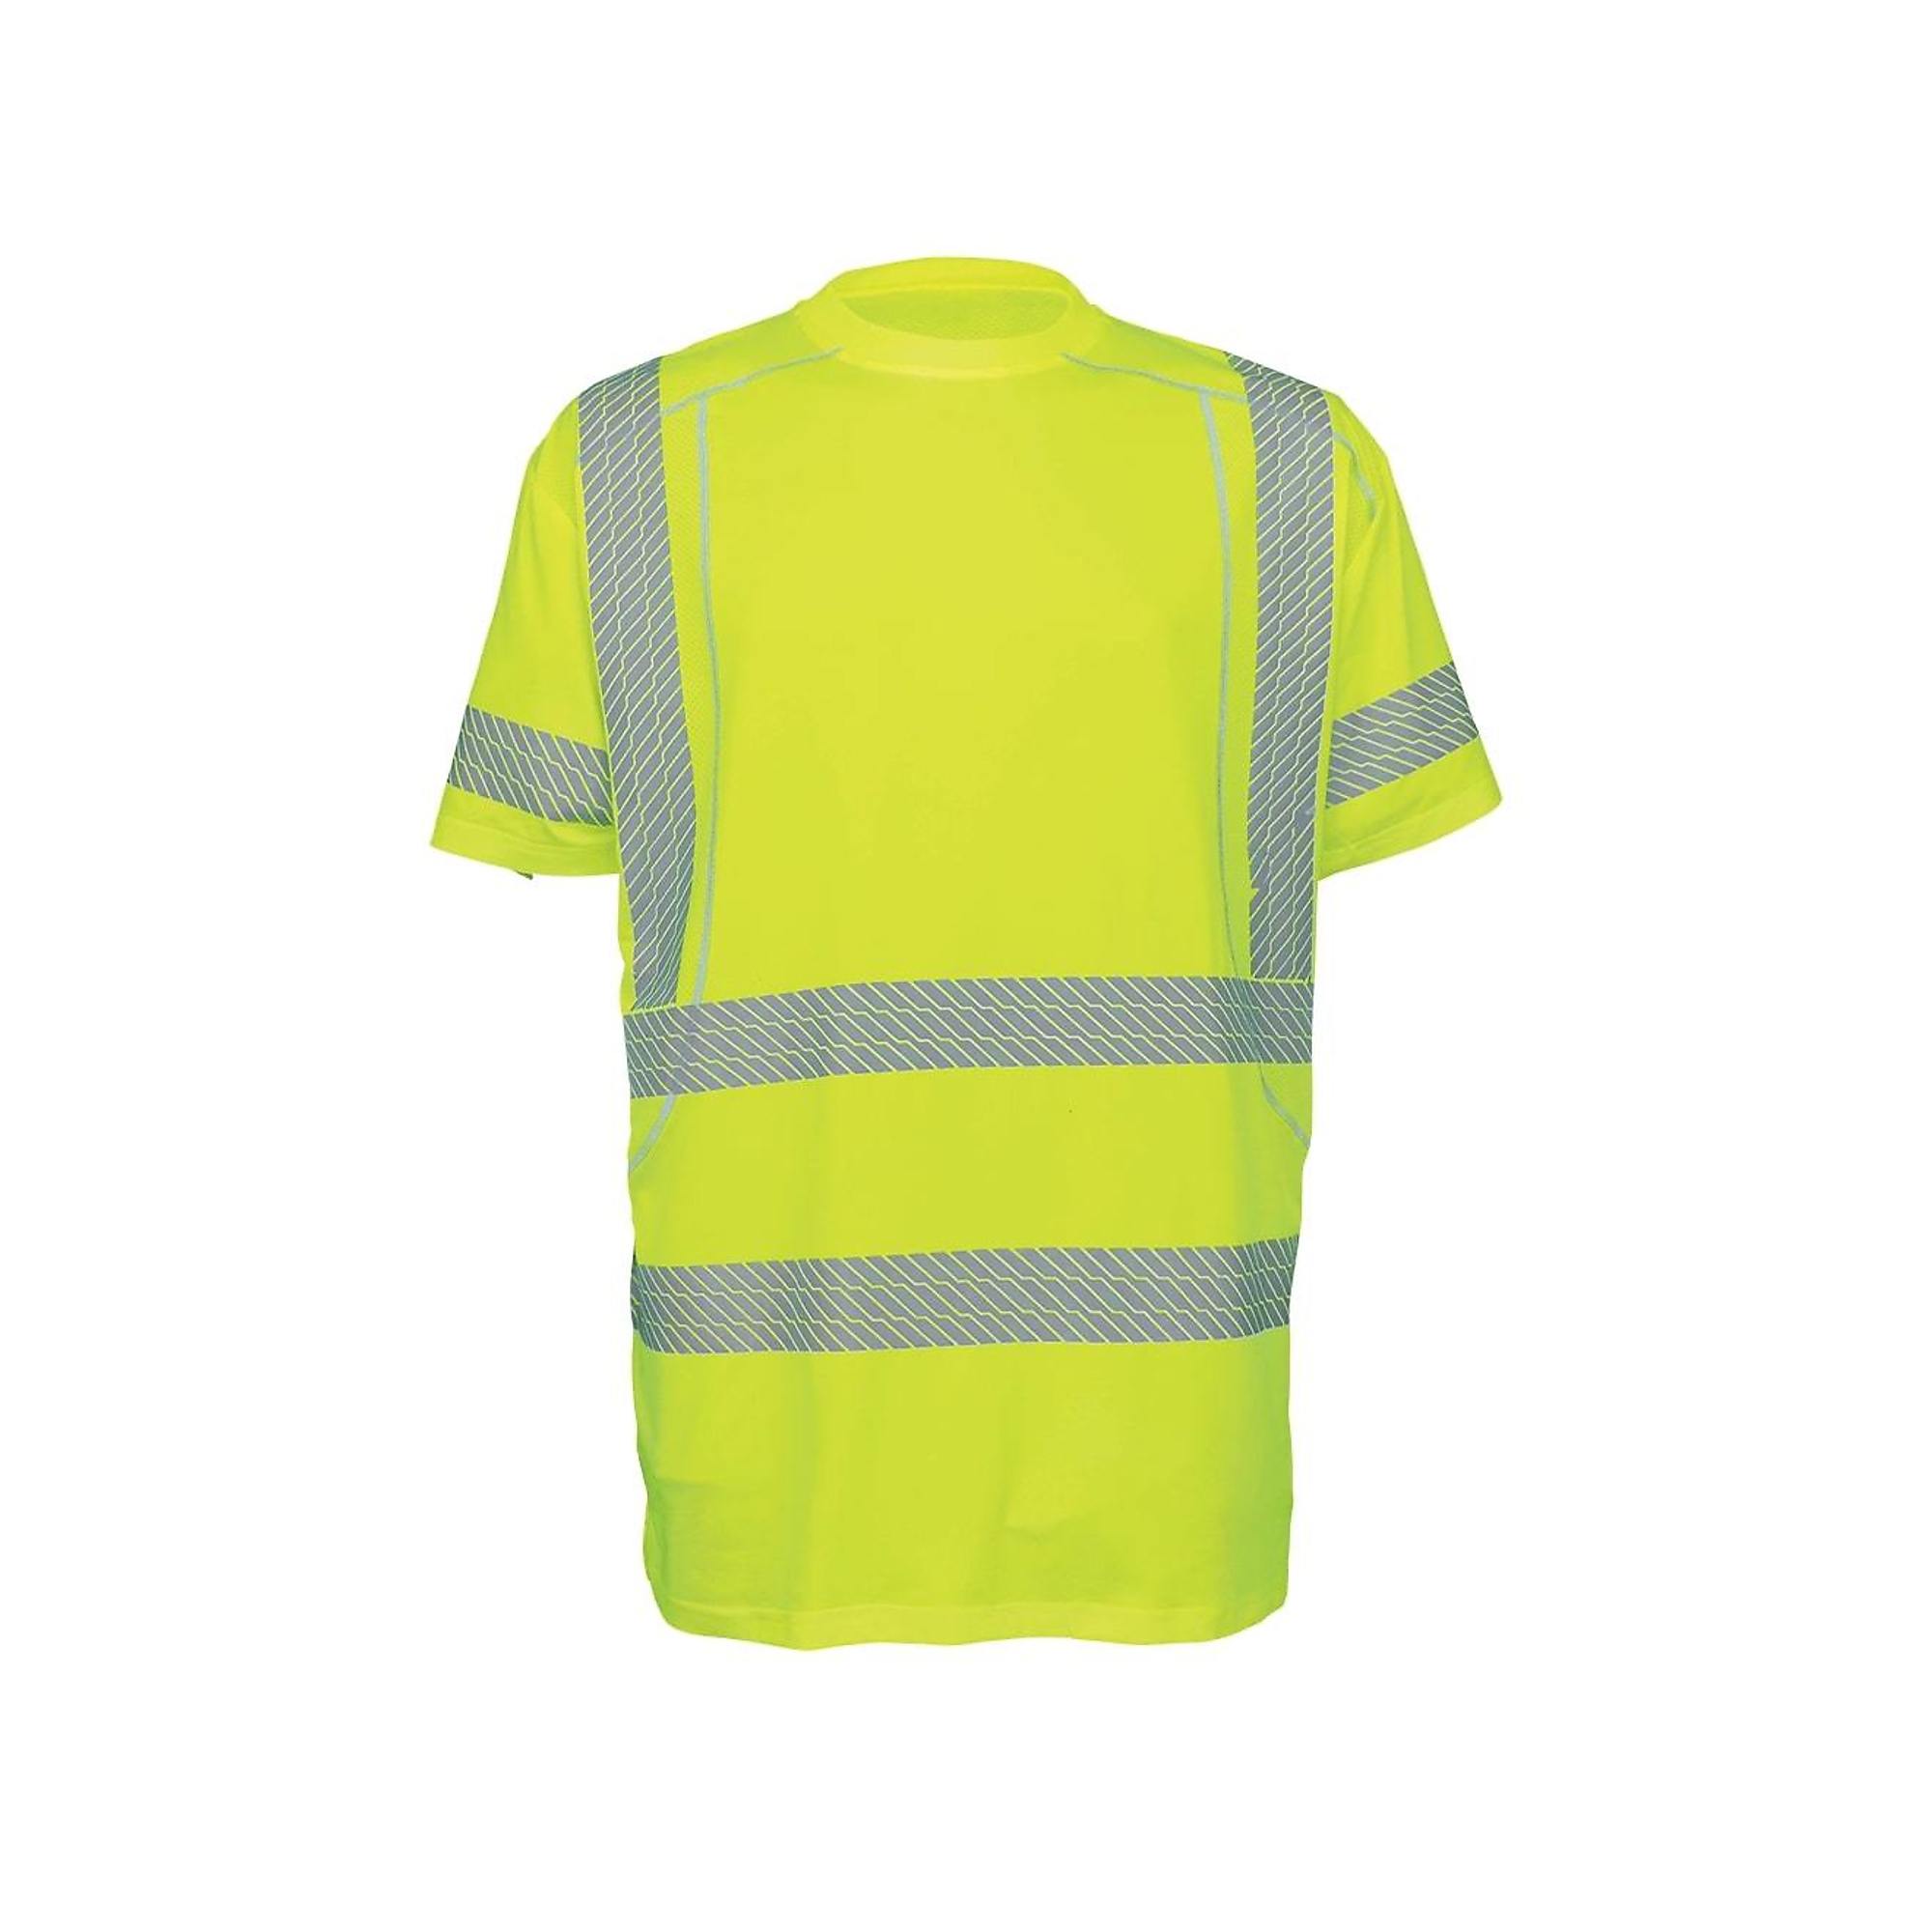 FrogWear, HV Yellow/Green, Class 3 Self-Wicking, Athletic Shirt, Size 5XL, Model GLO-205-5XL